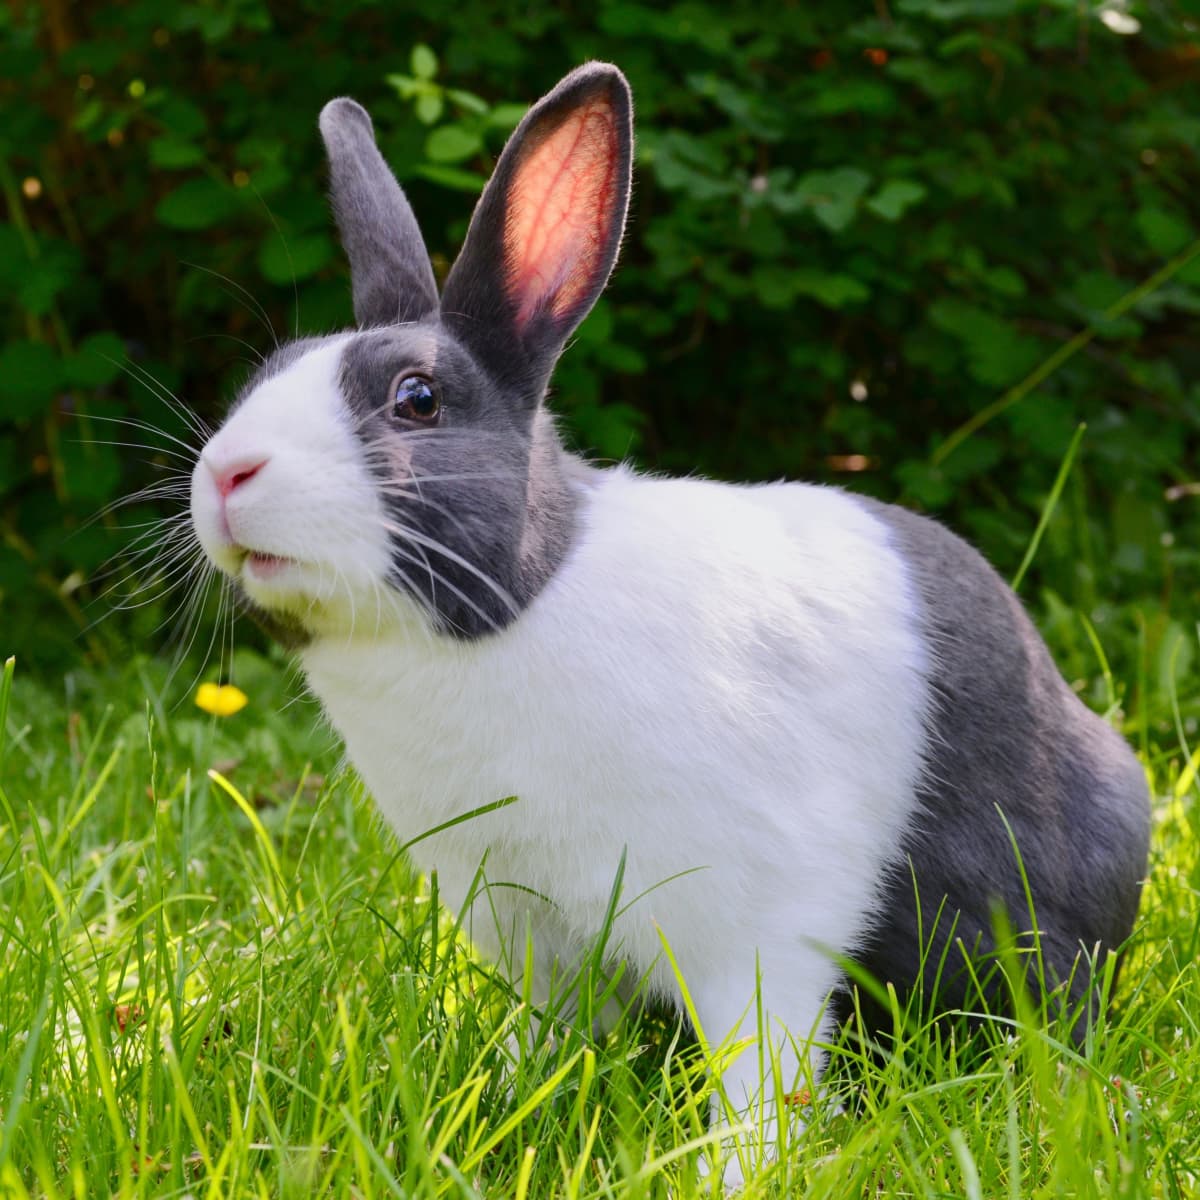 Peter Rabbit' updates everyone's favorite bunny - The Boston Globe